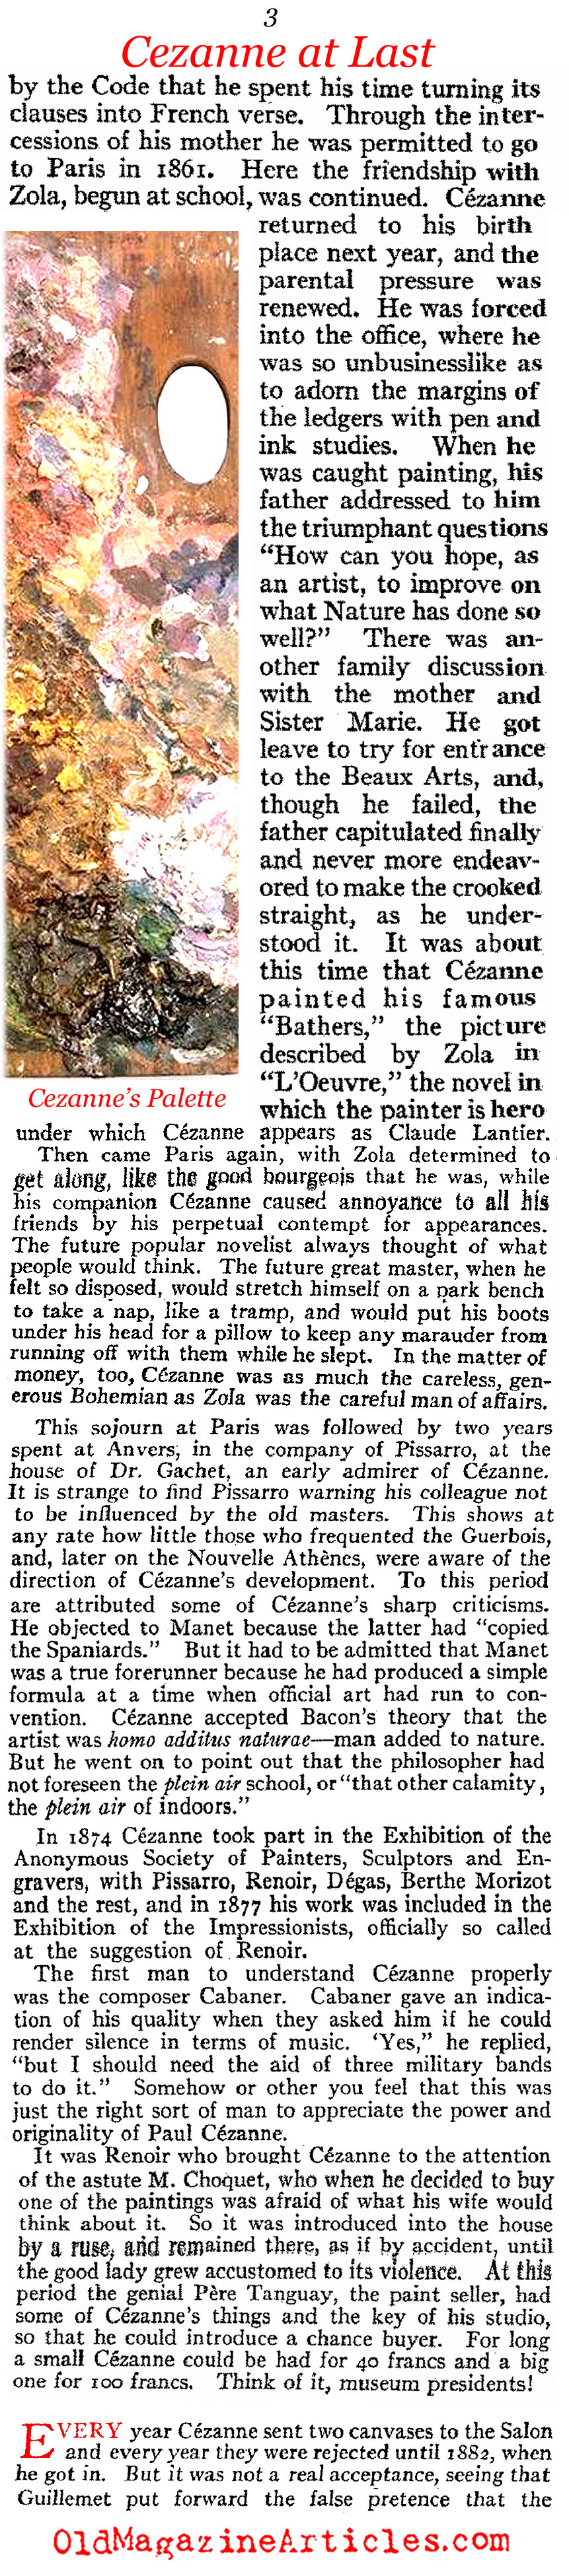 Paul Cezanne Gets His American Viewing  (Vanity Fair Magazine, 1915)